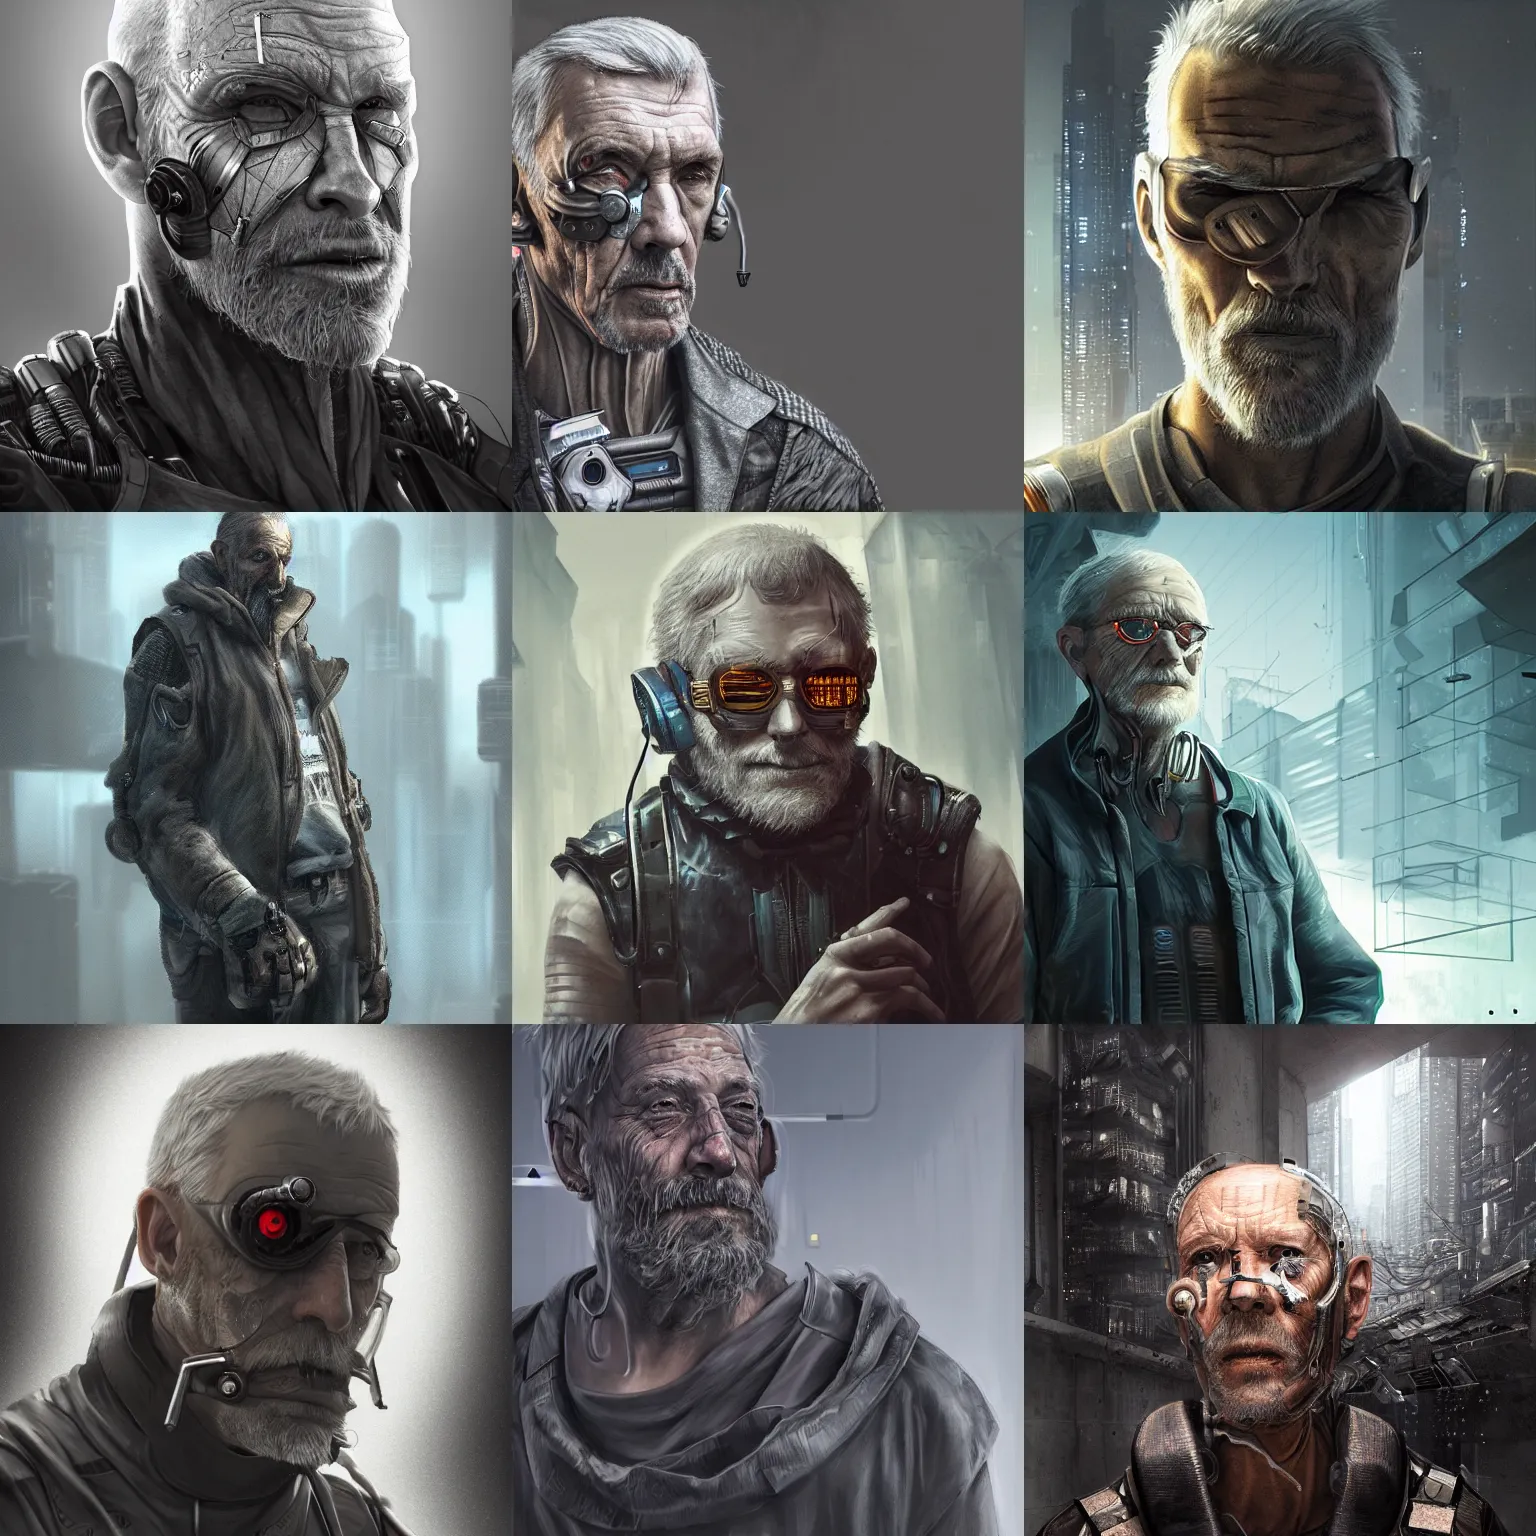 Prompt: Ultra realistic illustration of an old man cyborg, cyberpunk, sci-fi fantasy, dystopian, style of Reece Swanepoel